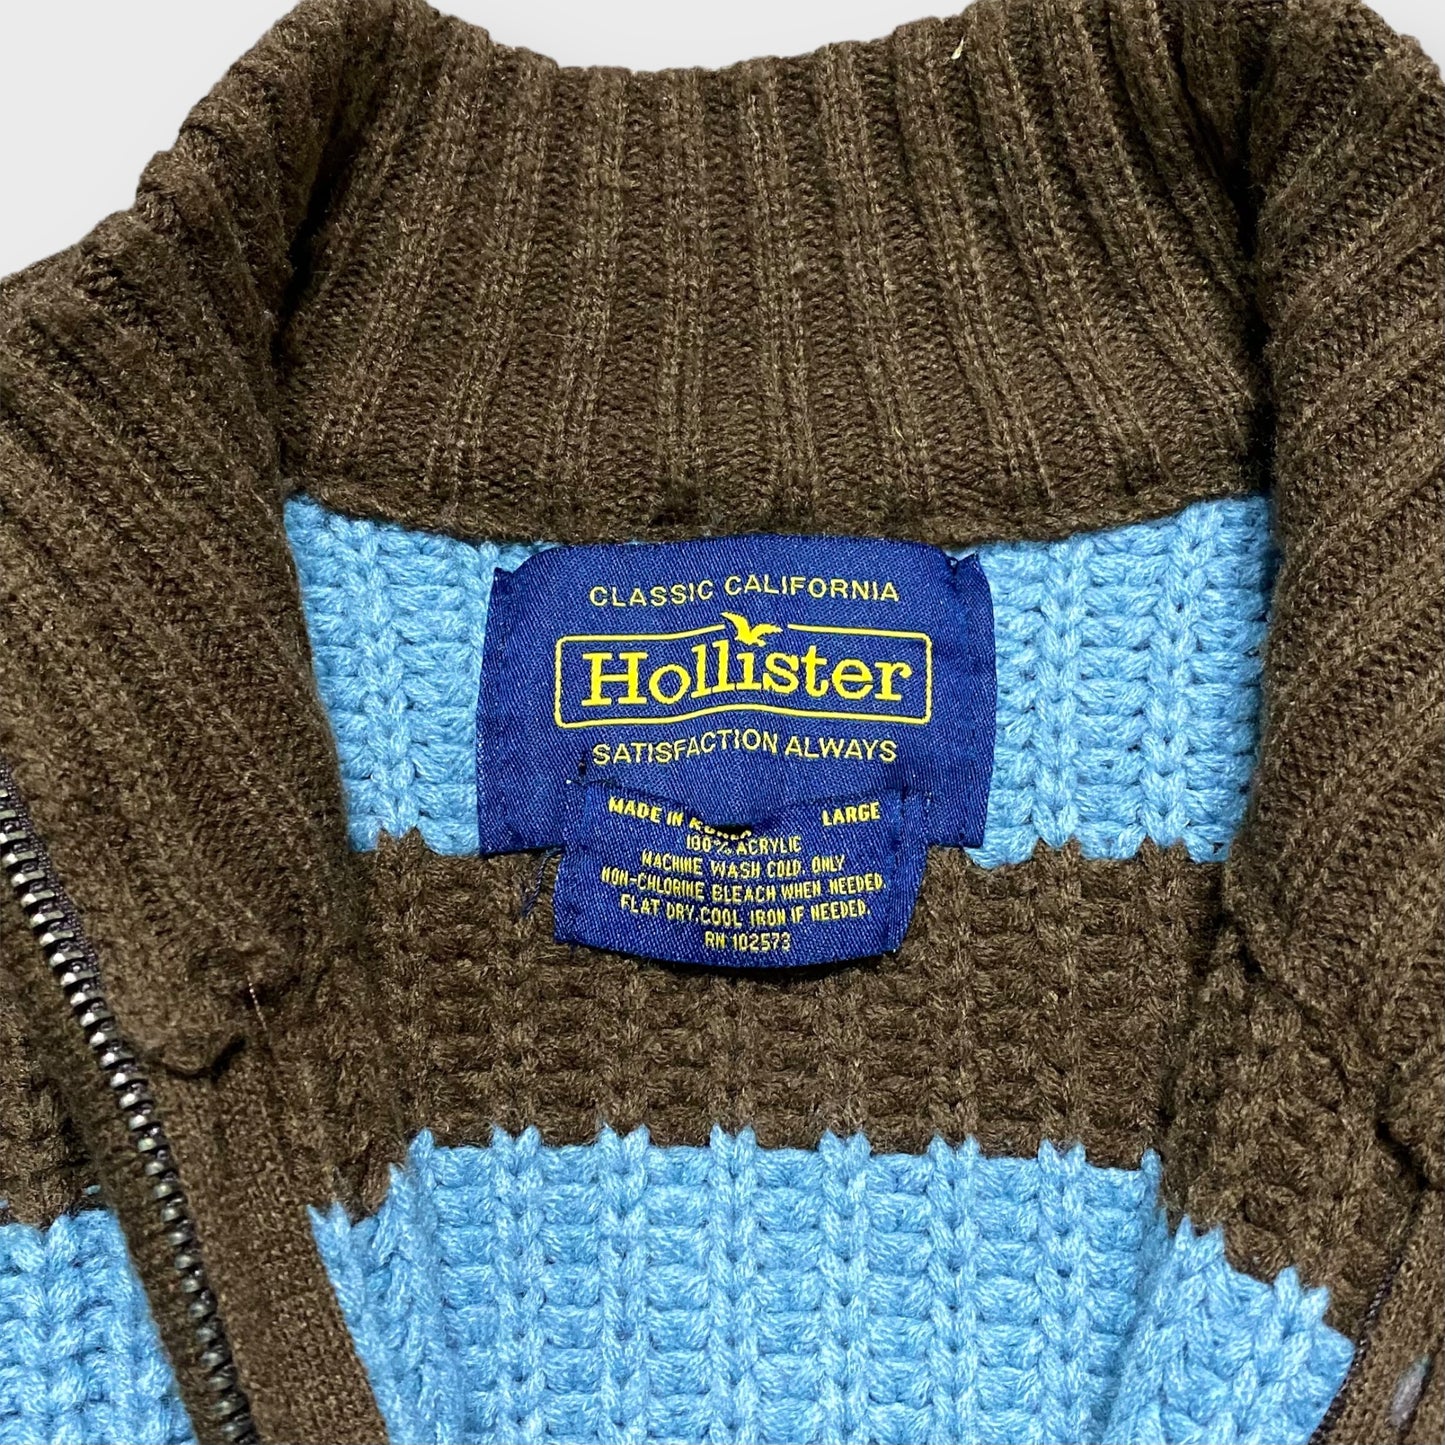 Border pattern full zip knit jacket